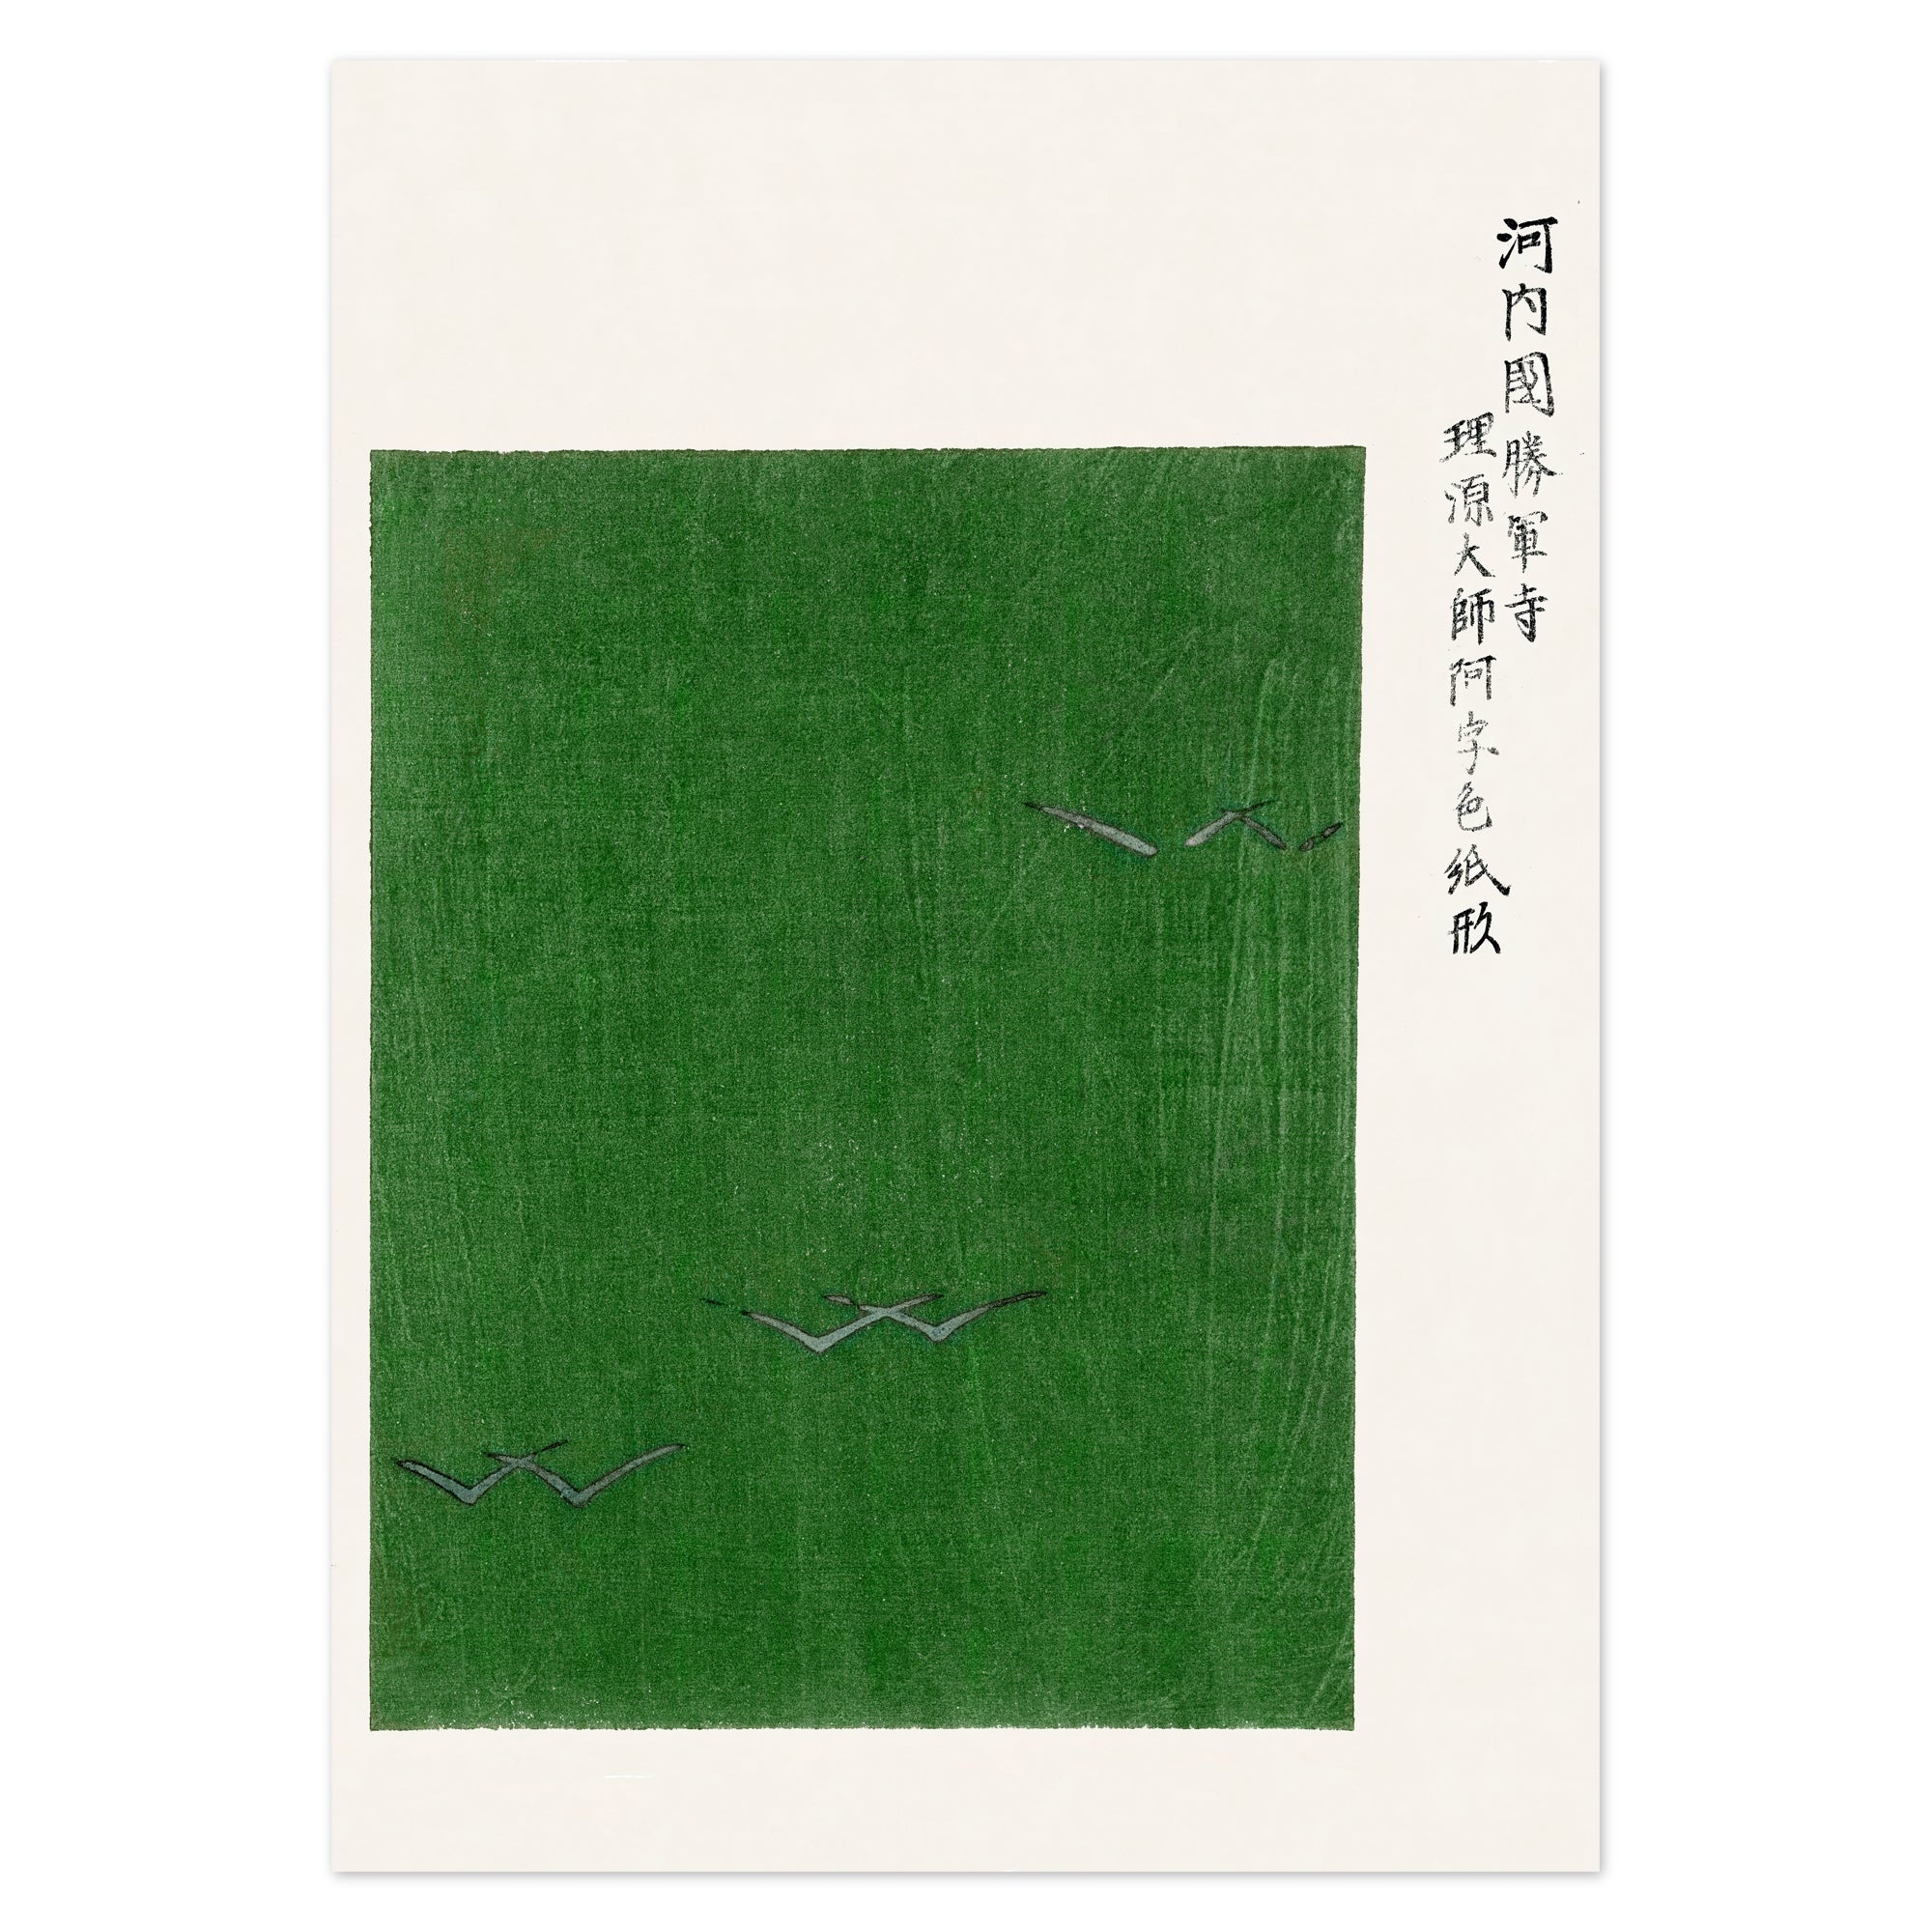 Taguchi Tomoki Poster - Green Print of Seagulls